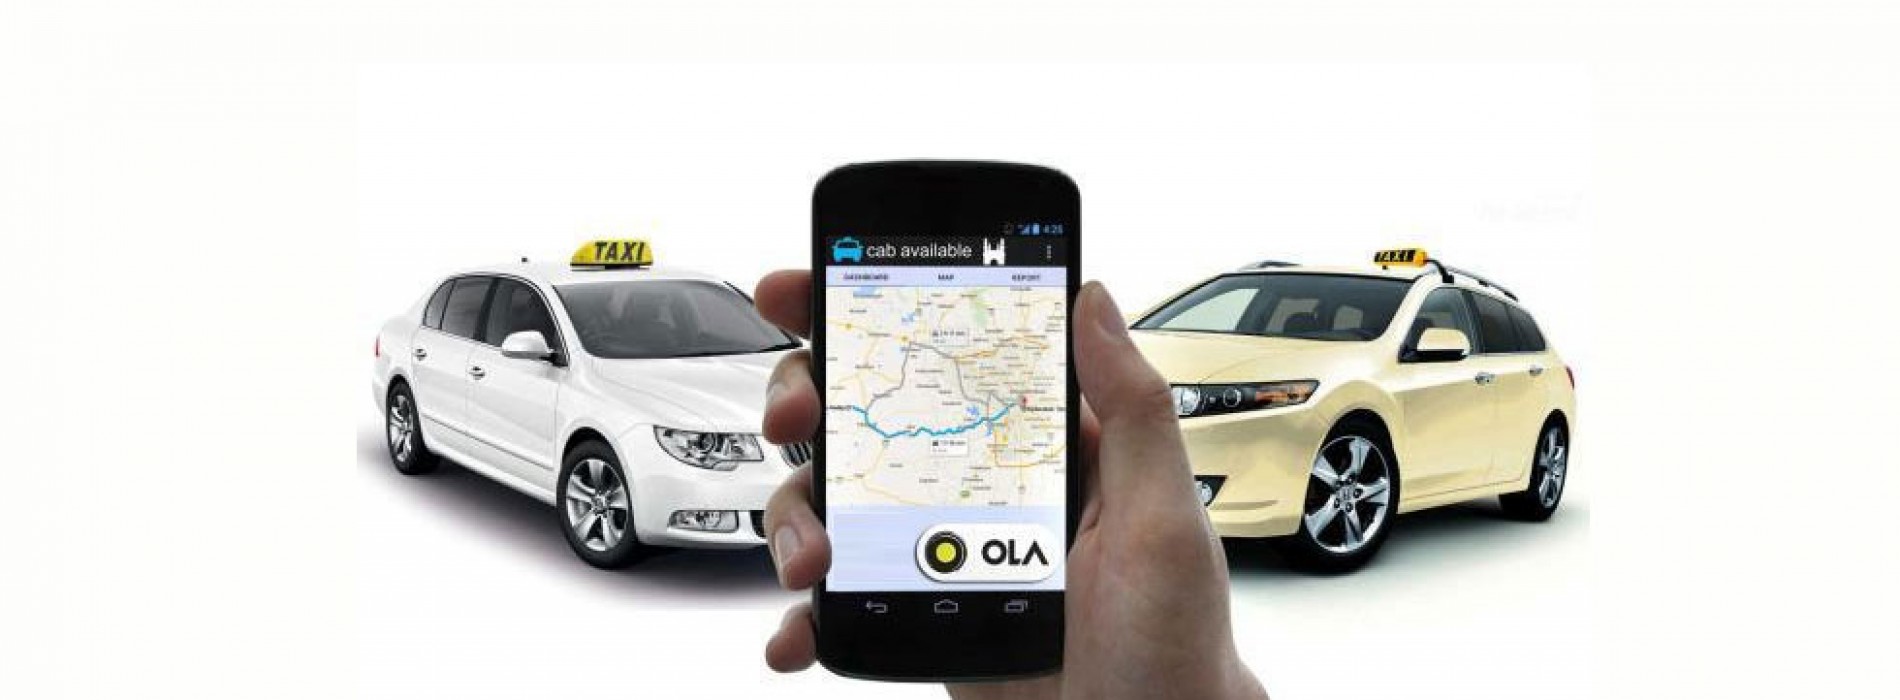 Ola launches more economy cab rides in India